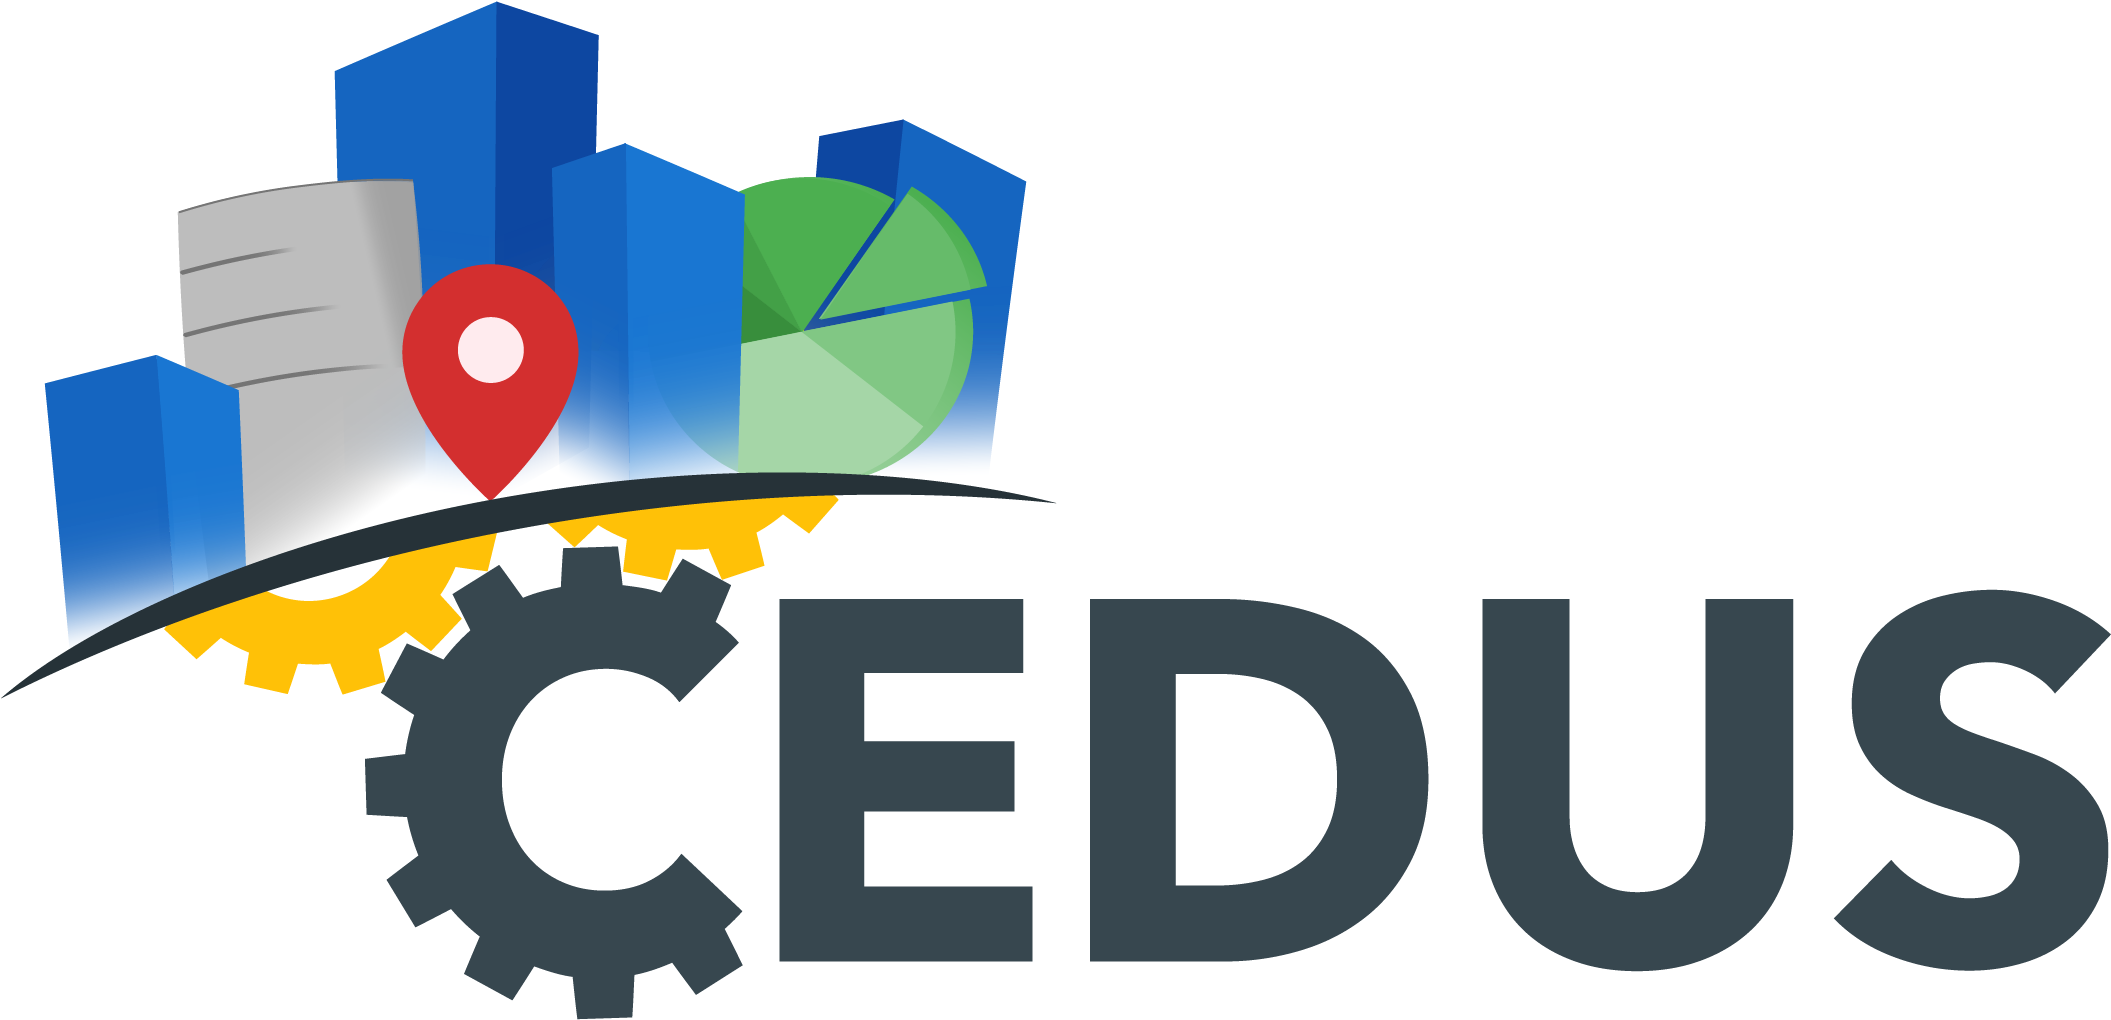 Cedus, An Eit Digital Initiative, Shortlisted For Second - Doedijns Logo (2250x1125)